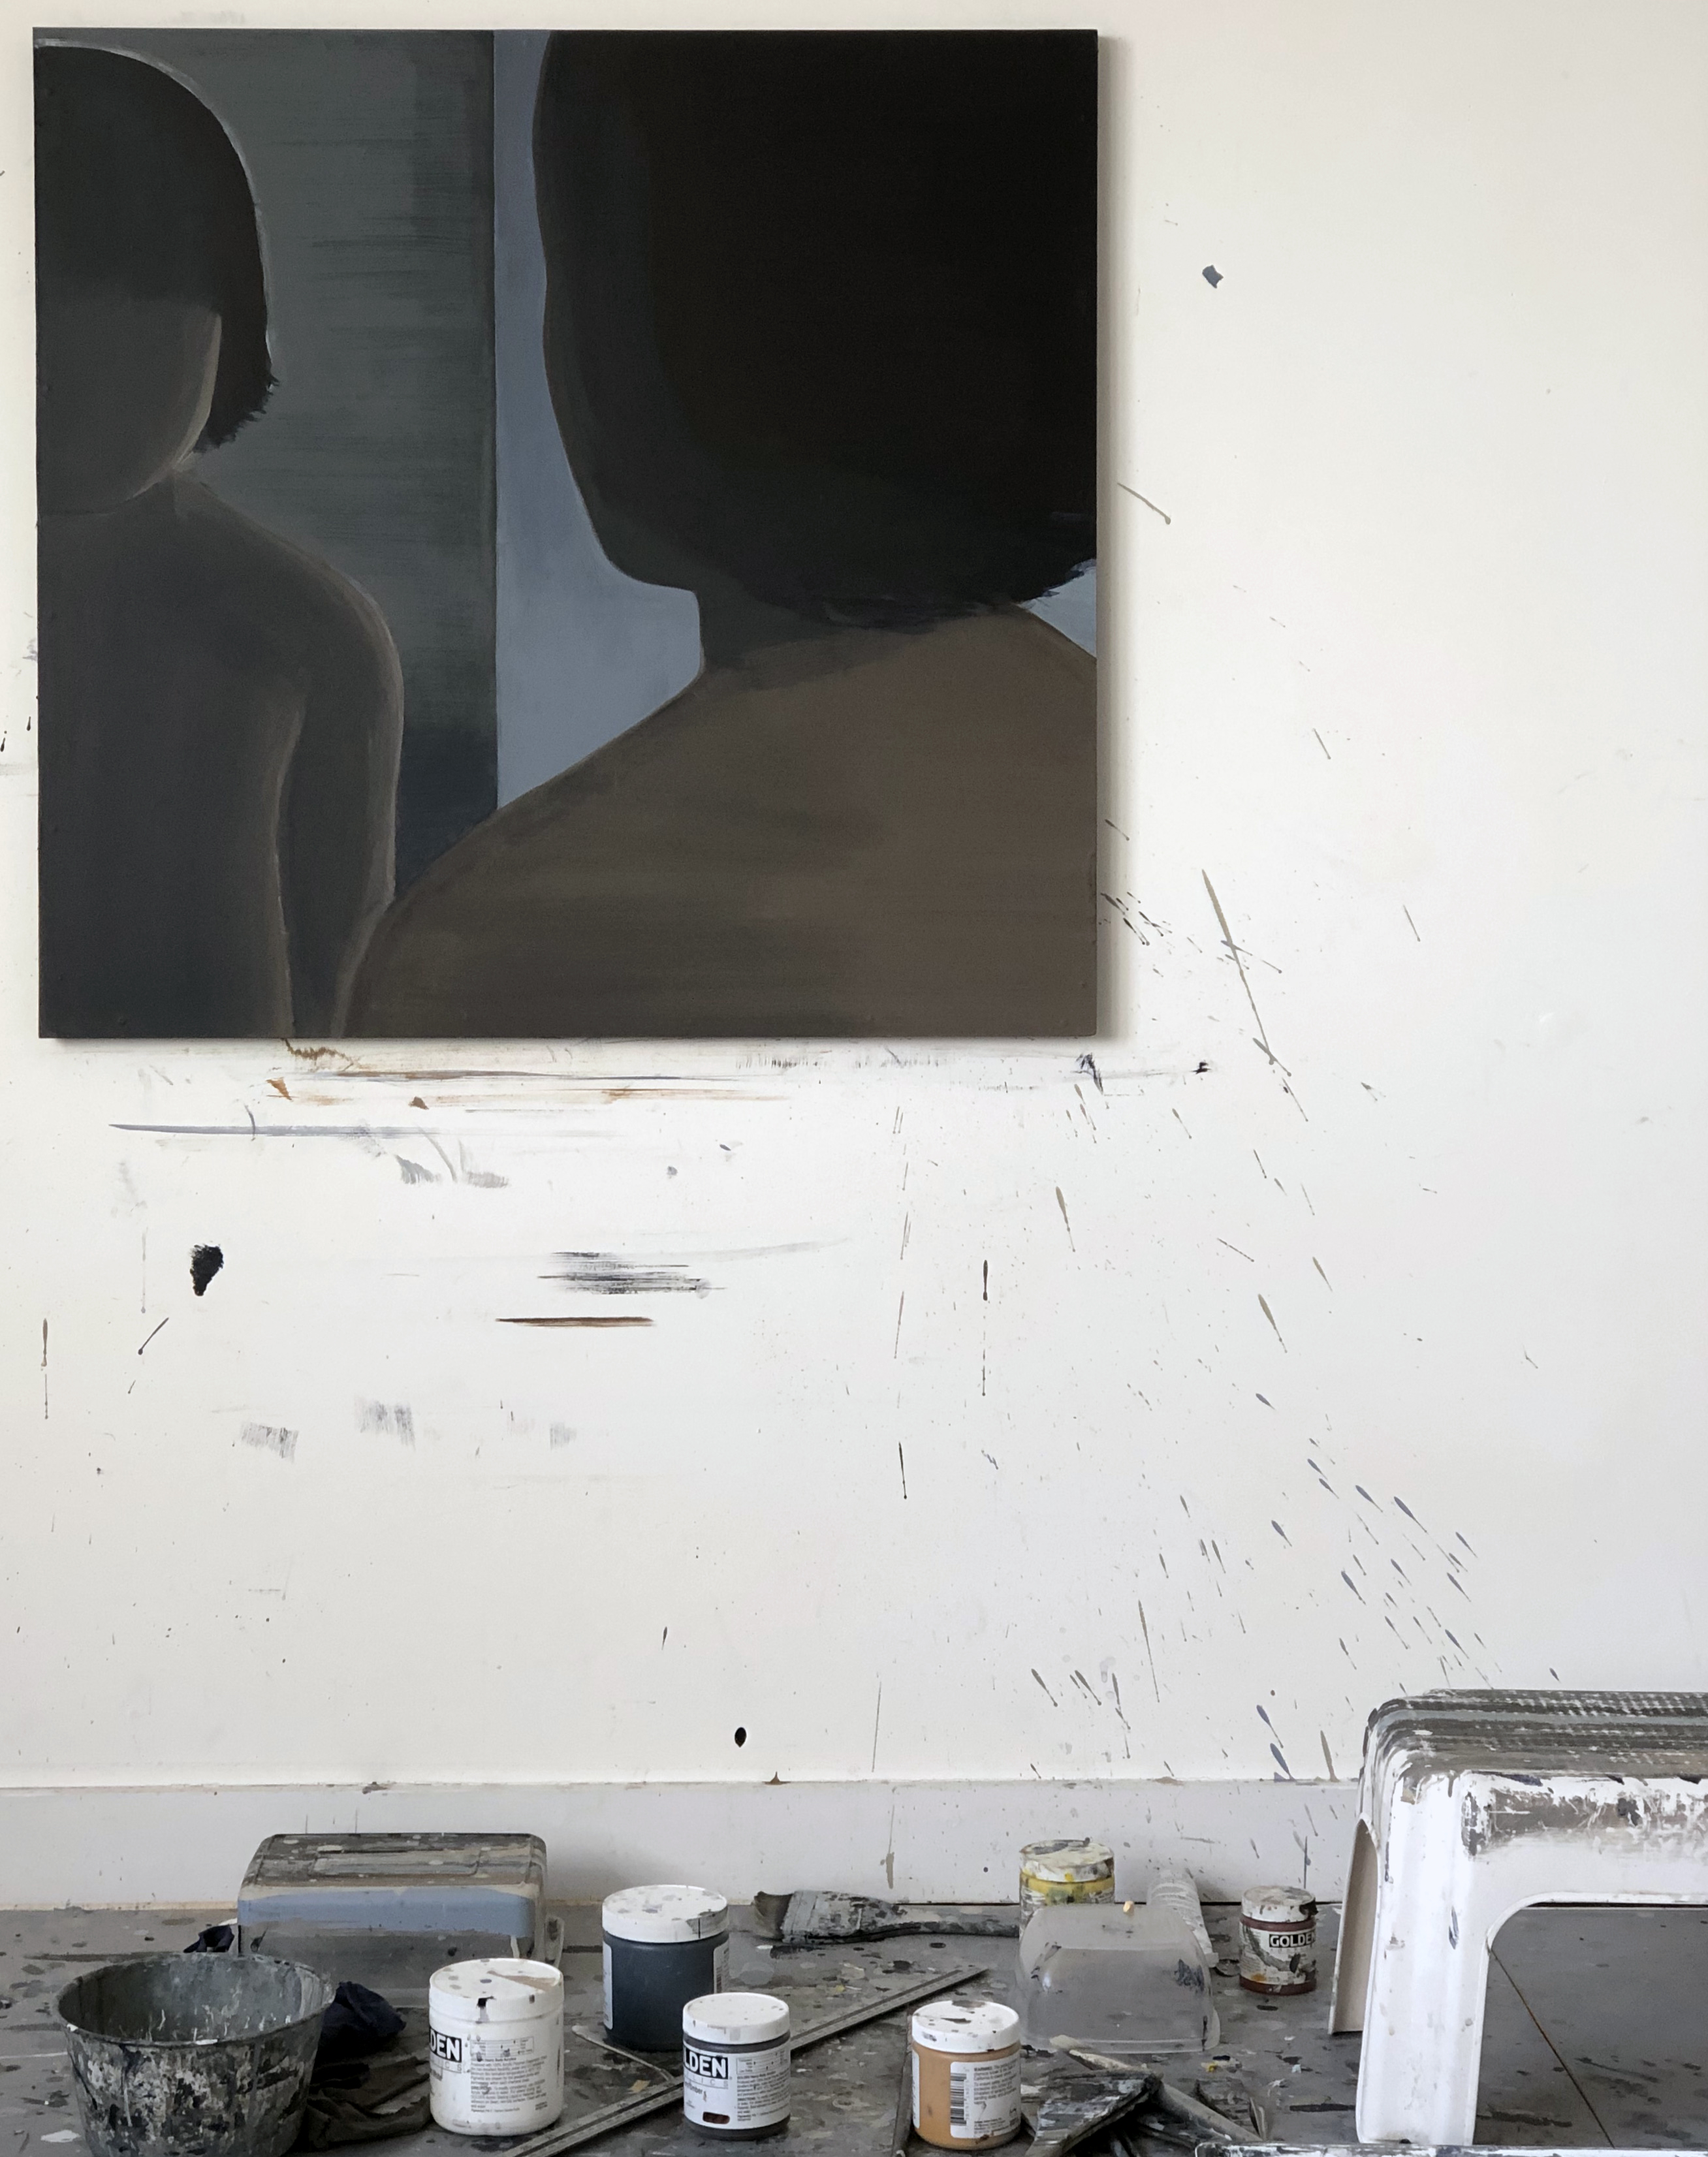 image: Miho Sato 'Untitled' acrylic on board, 80×84cm, studio shot, 20 August 2020